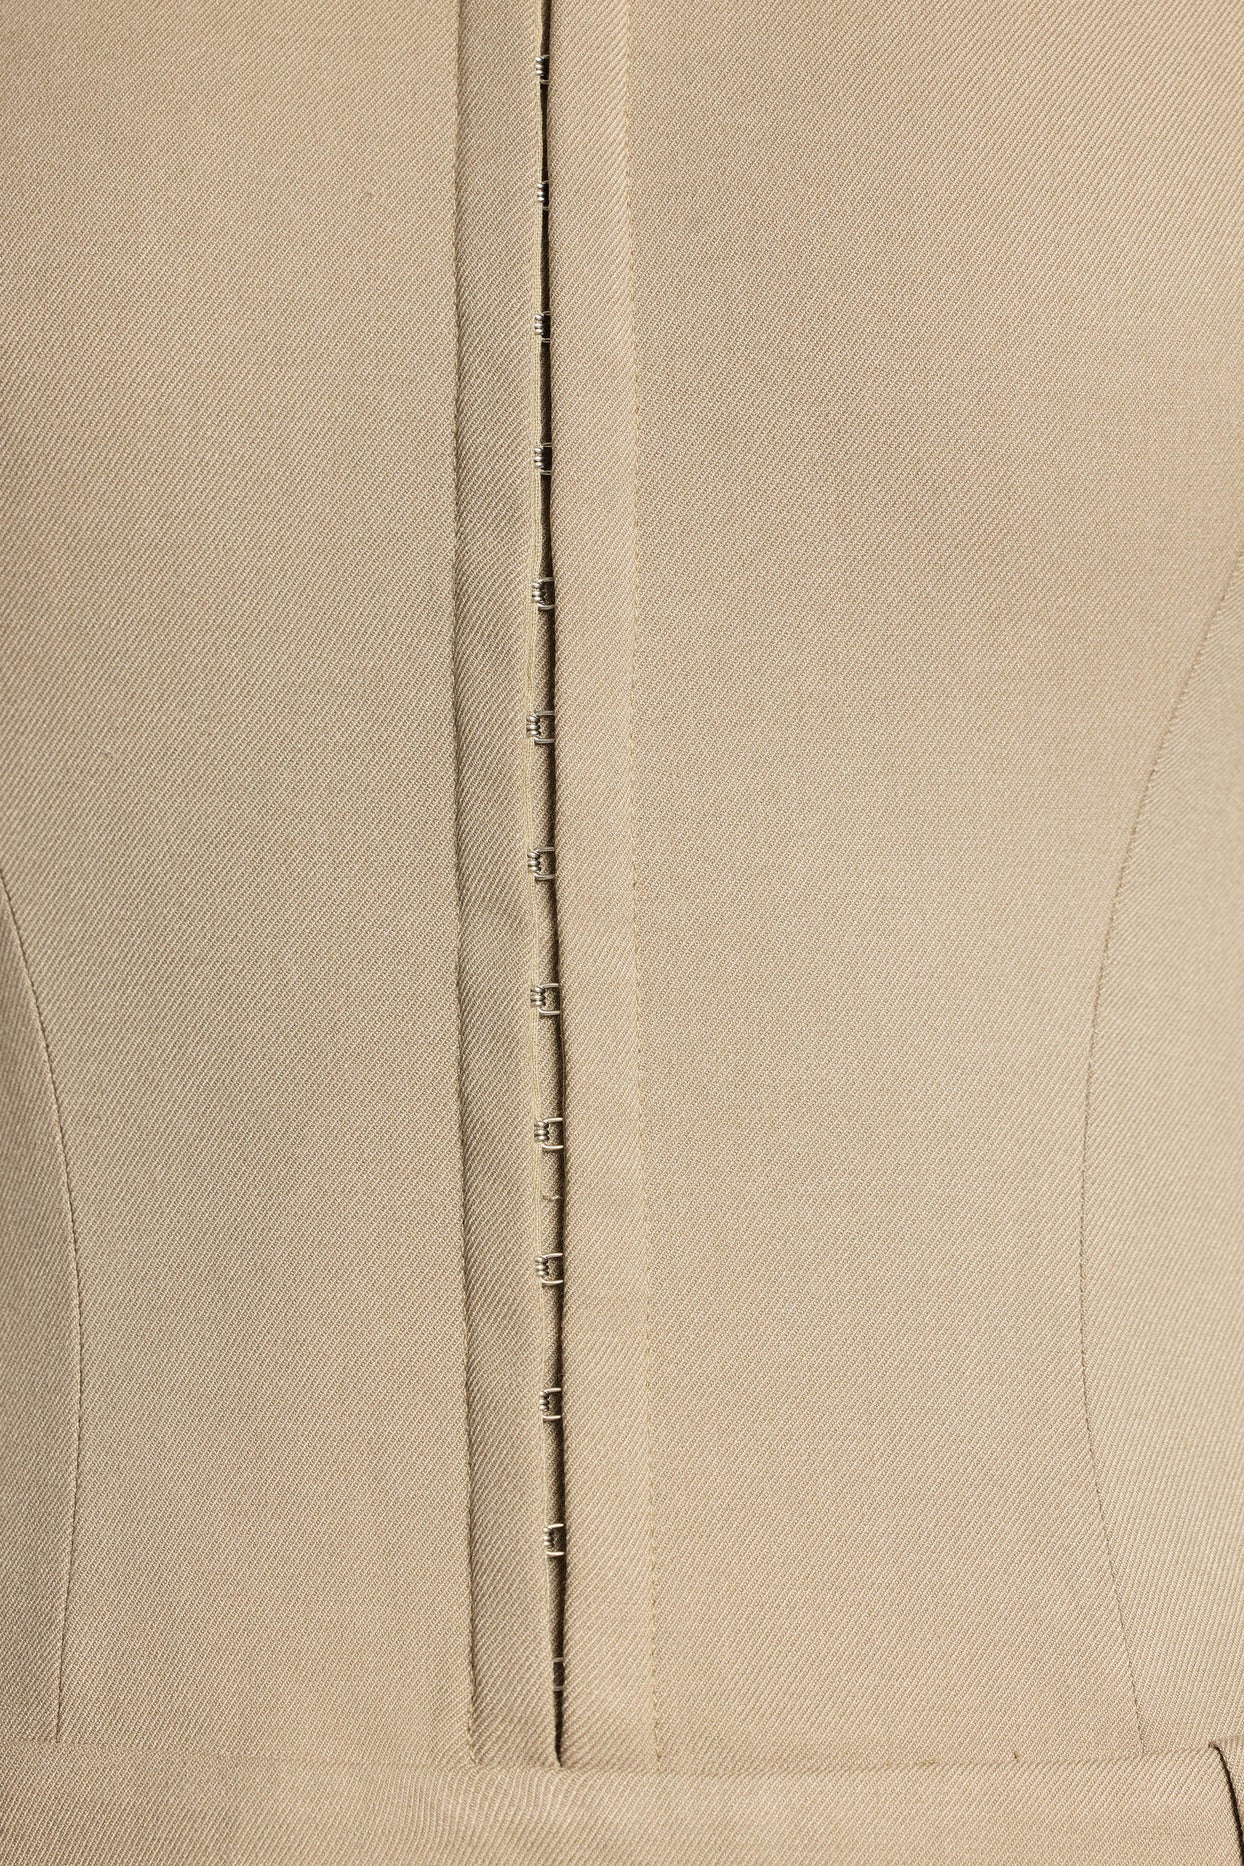 Kombinezon z gorsetem typu bandeau ze szczotkowanego diagonalu w kolorze taupe